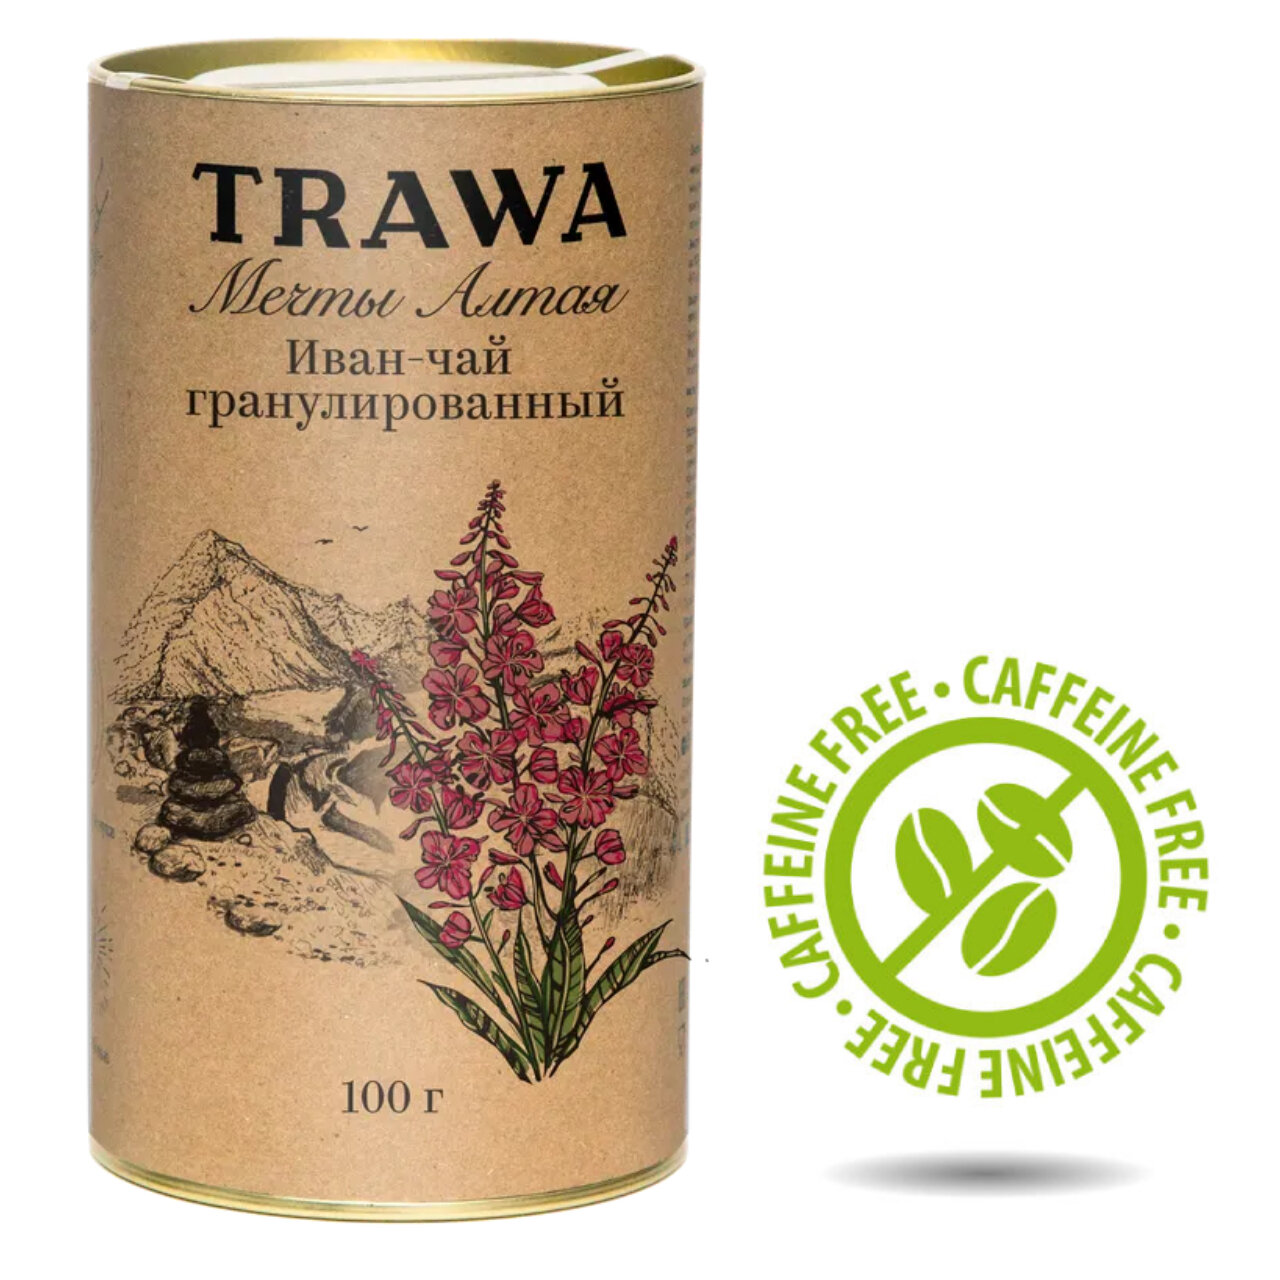 Trawa Иван-Чай гранулированный 100 гр